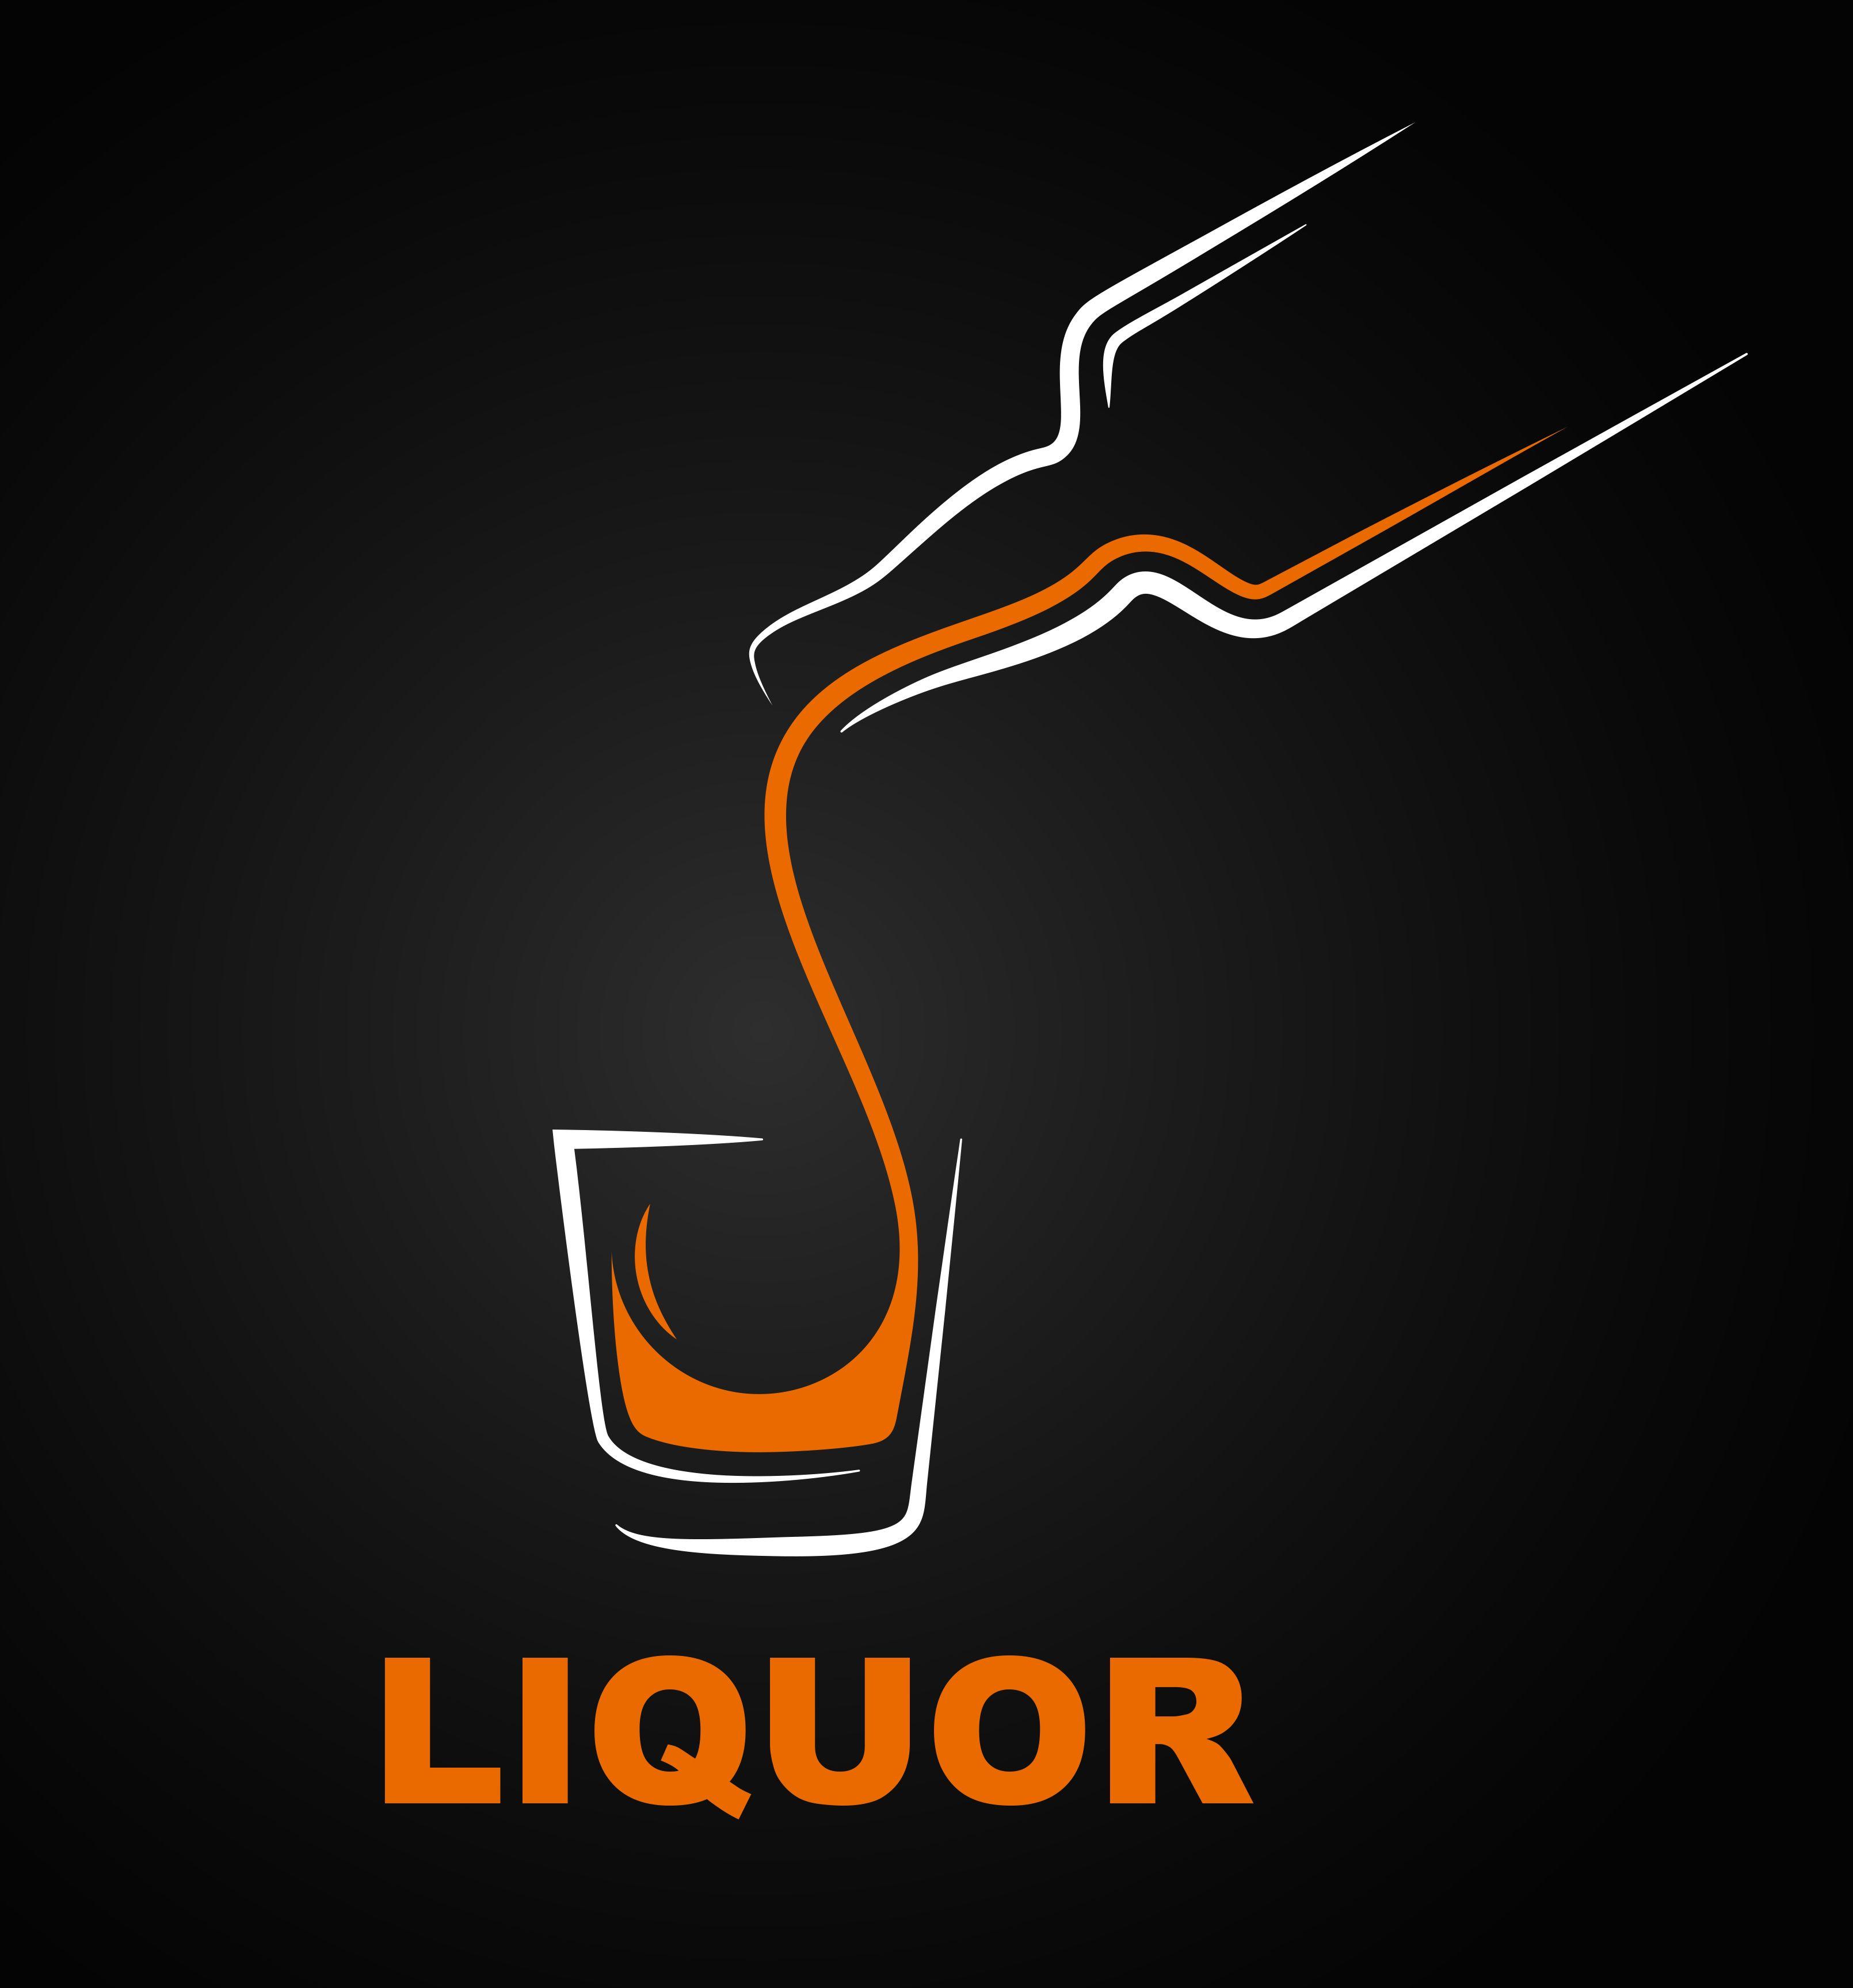 All Liquor Logo - Las Vegas Liquor Outlet | Liquor Wine and Beer | Kegs